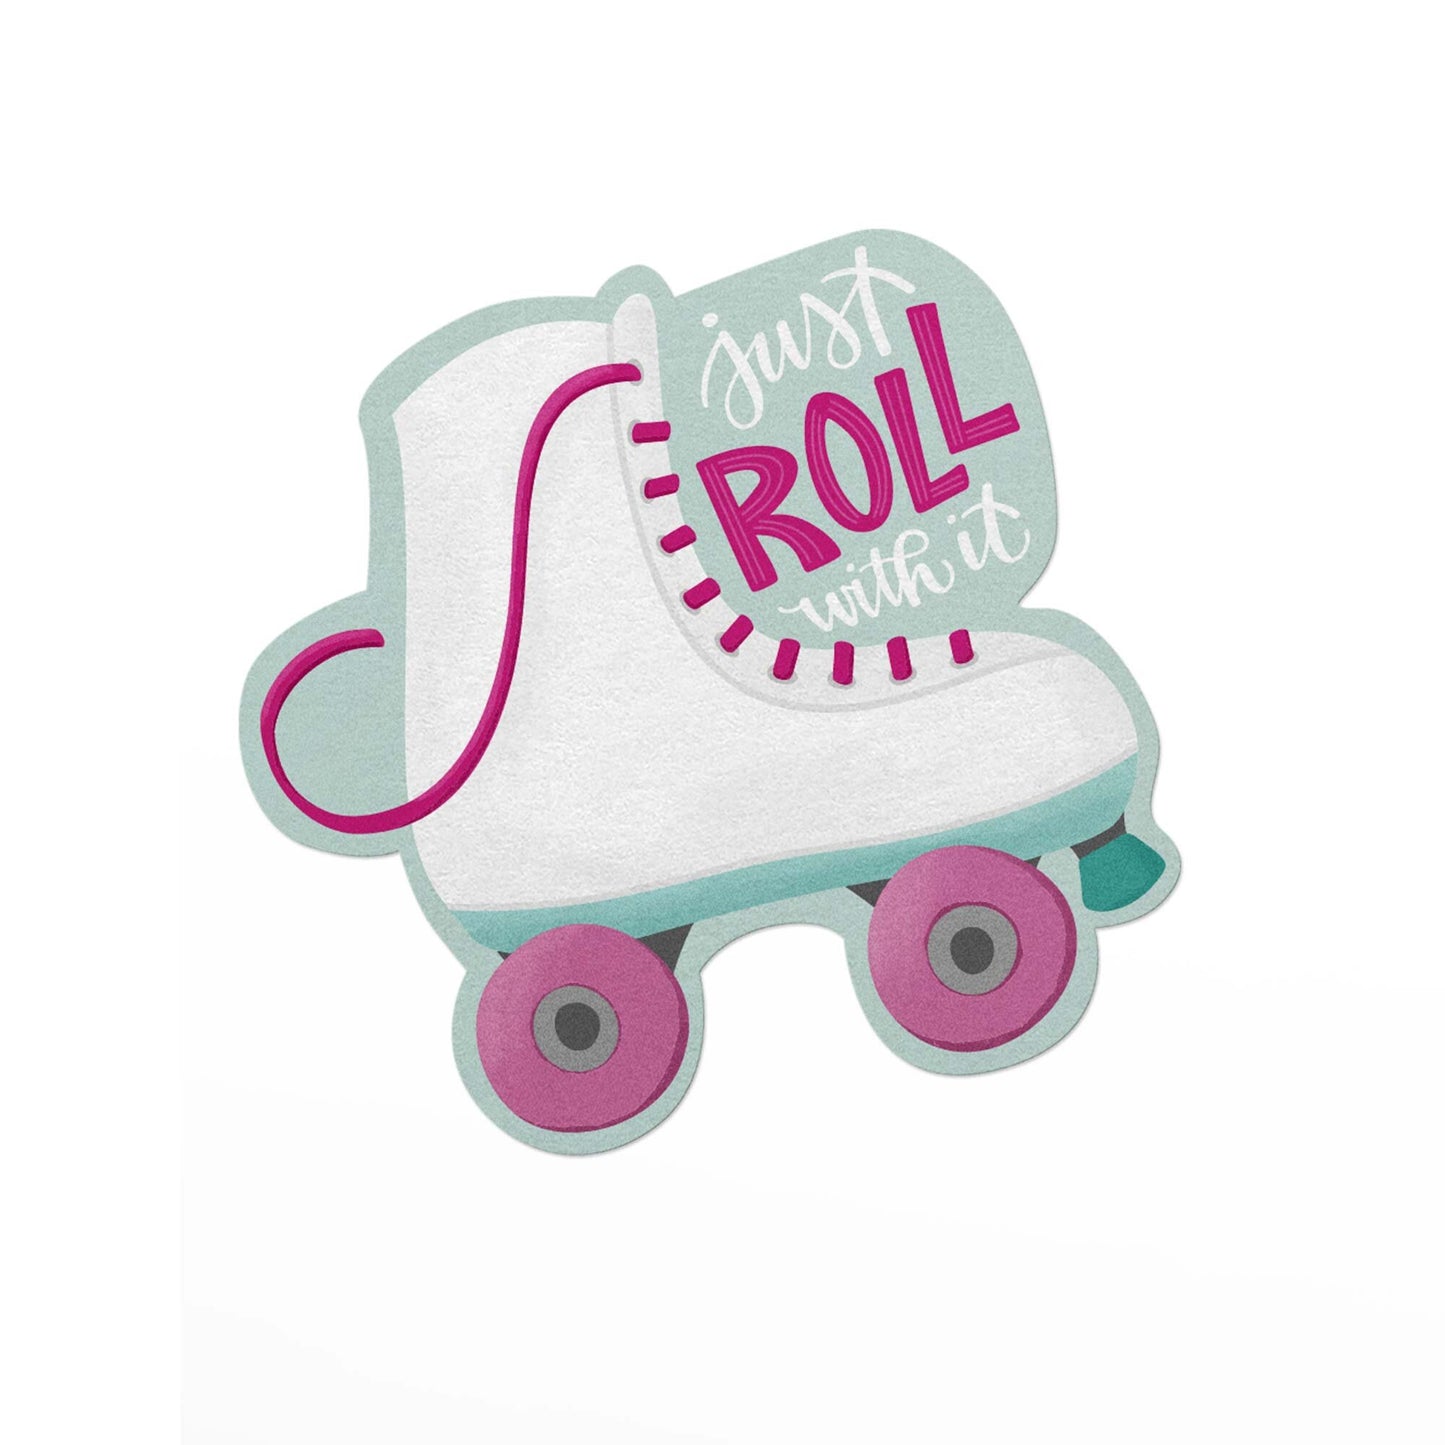 Just Roll with It Roller Skates Vinyl Sticker